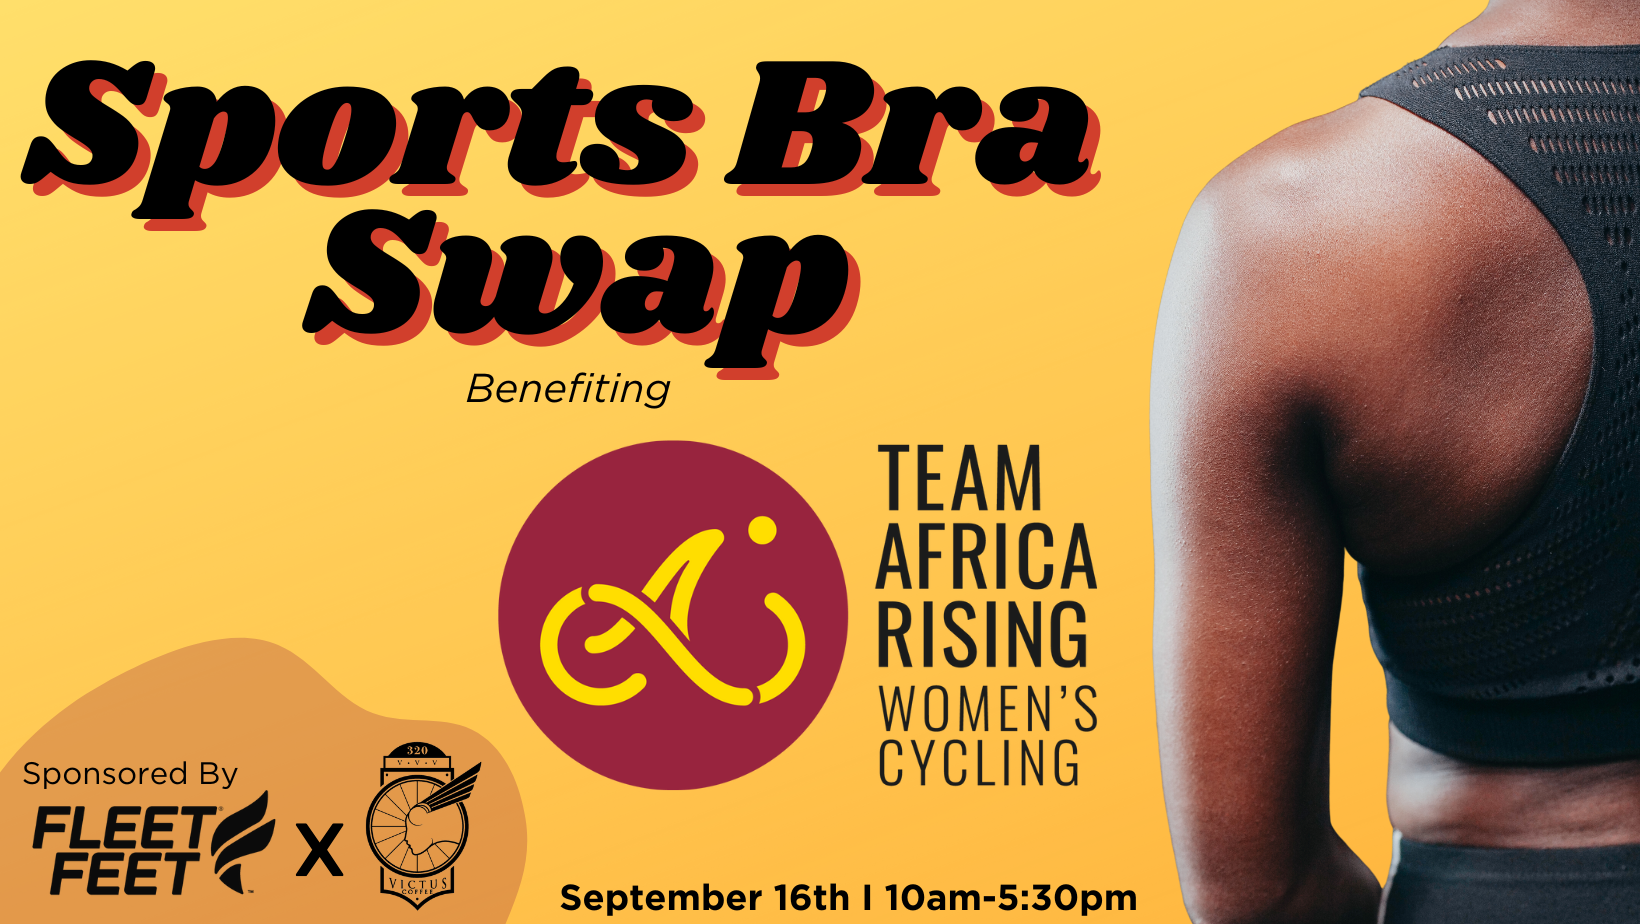 Sports Bra Swap benefiting Team Africa Rising Women's Cycling